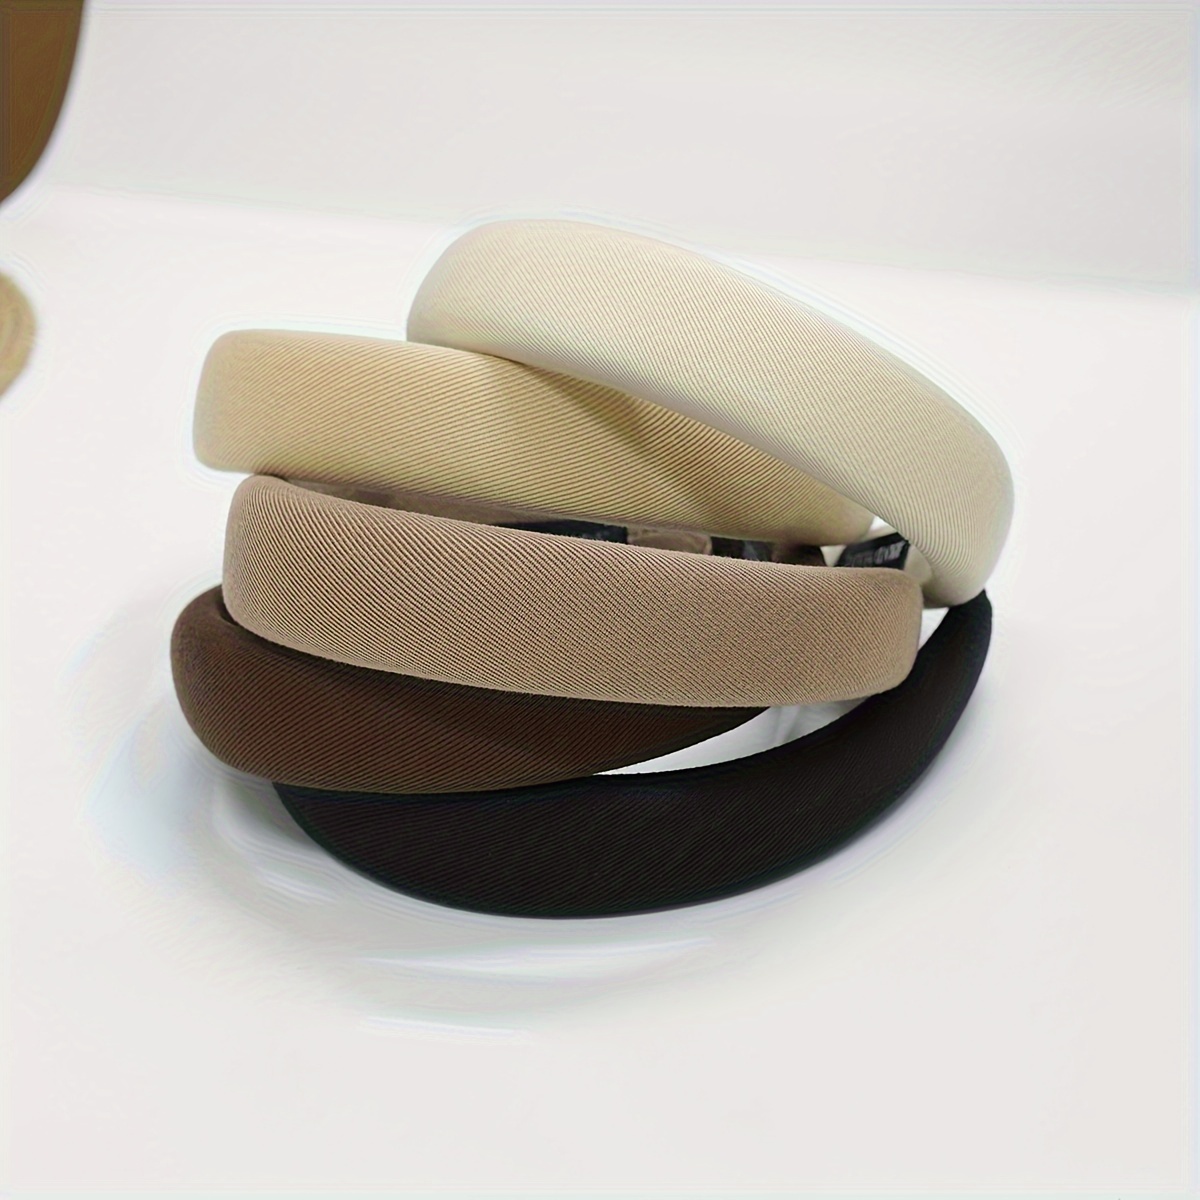 STHEJFB Wide Braided Headband Hoop Fashion Hair Accessories Elastic  Non-slip Band for Women and Girl (Dark Brown)